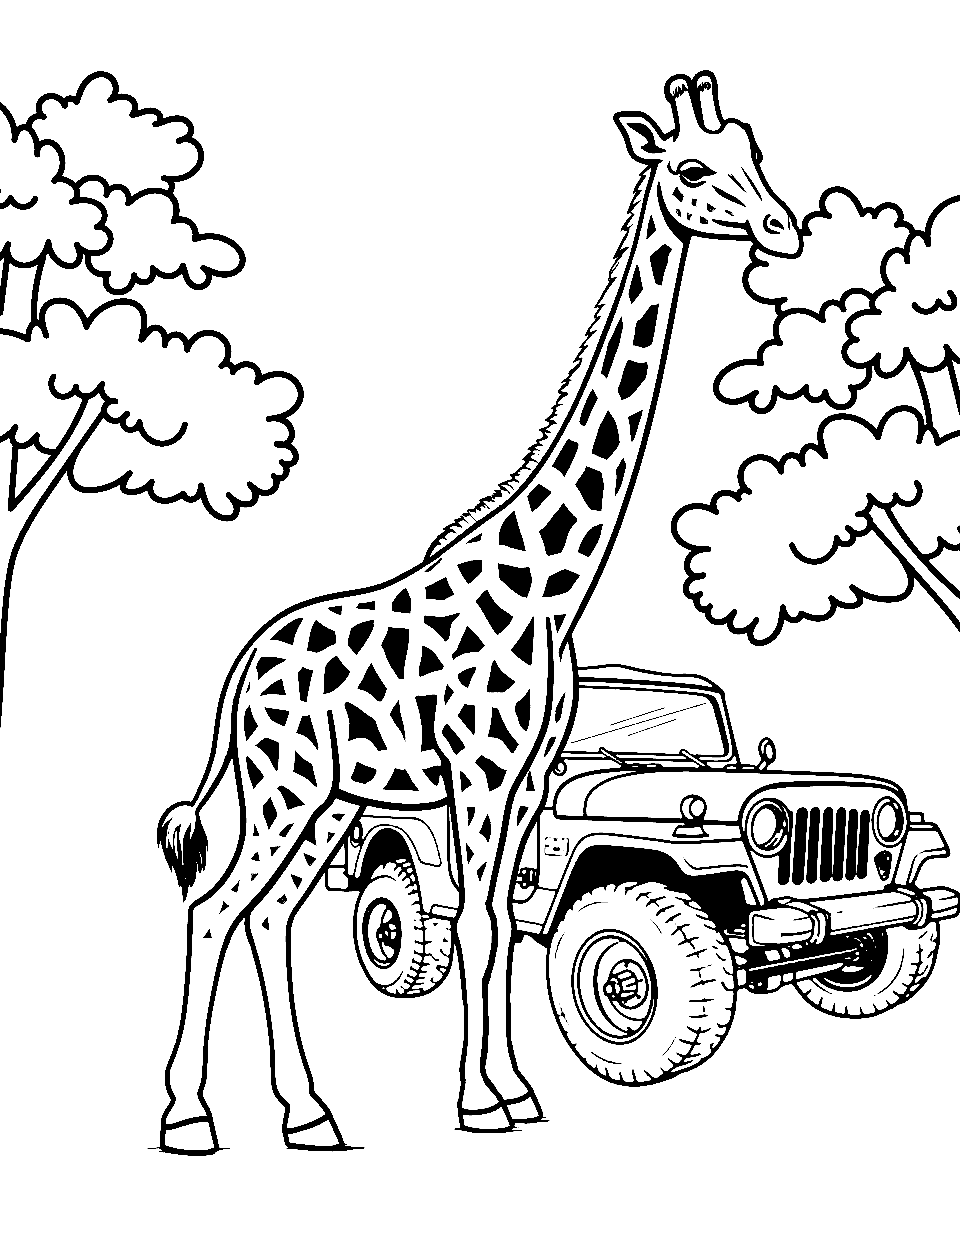 Safari Expedition Coloring Page - A giraffe observing a safari jeep.